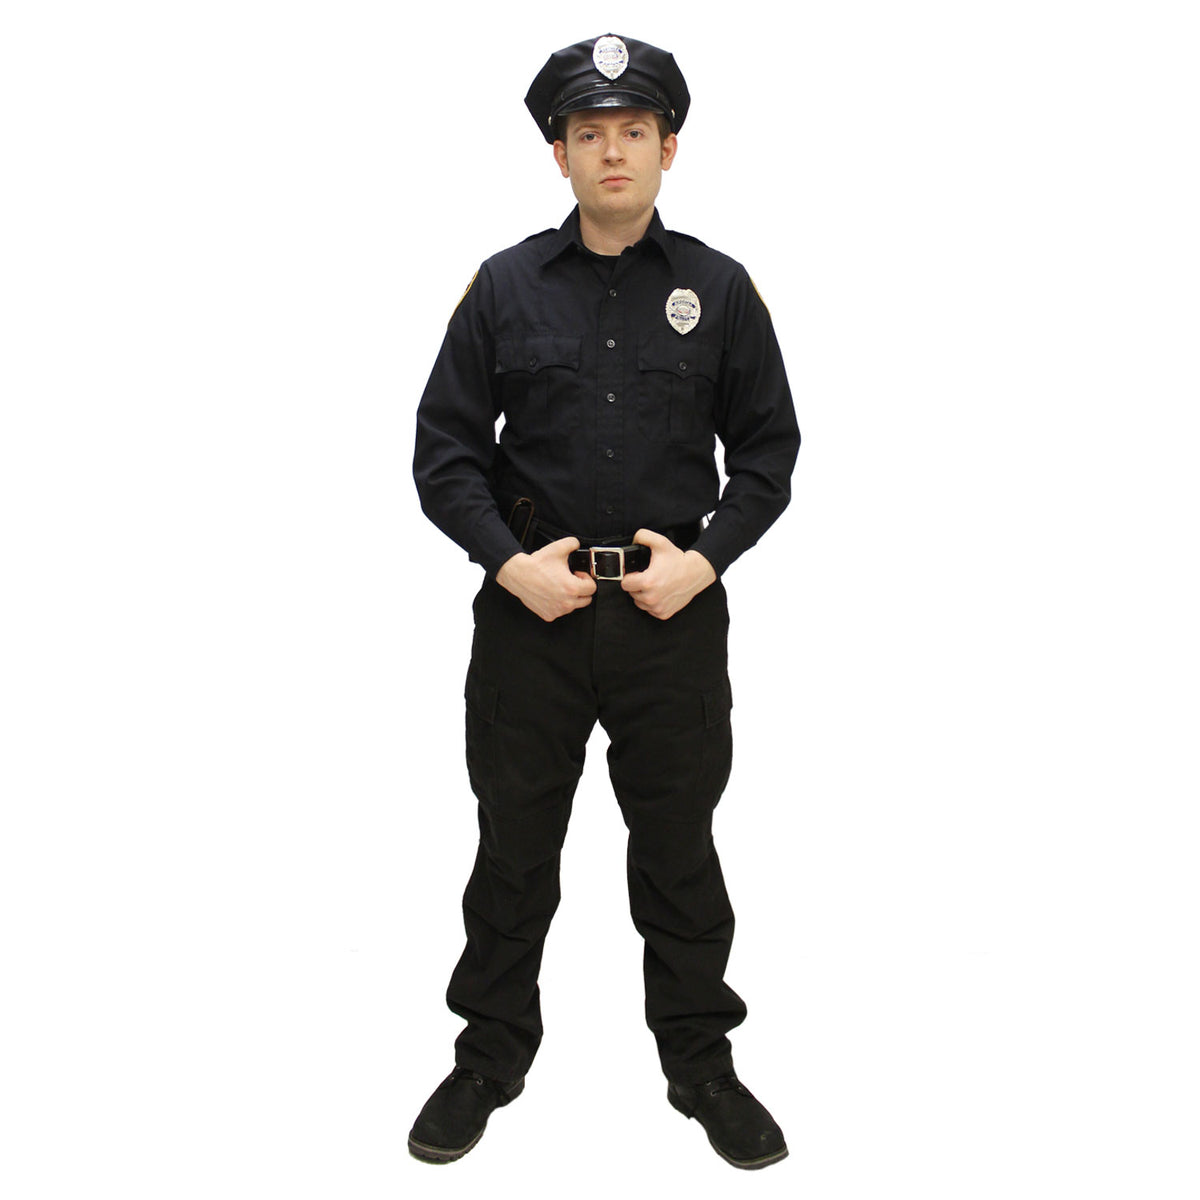 Production Quality Long Sleeve Police Uniform